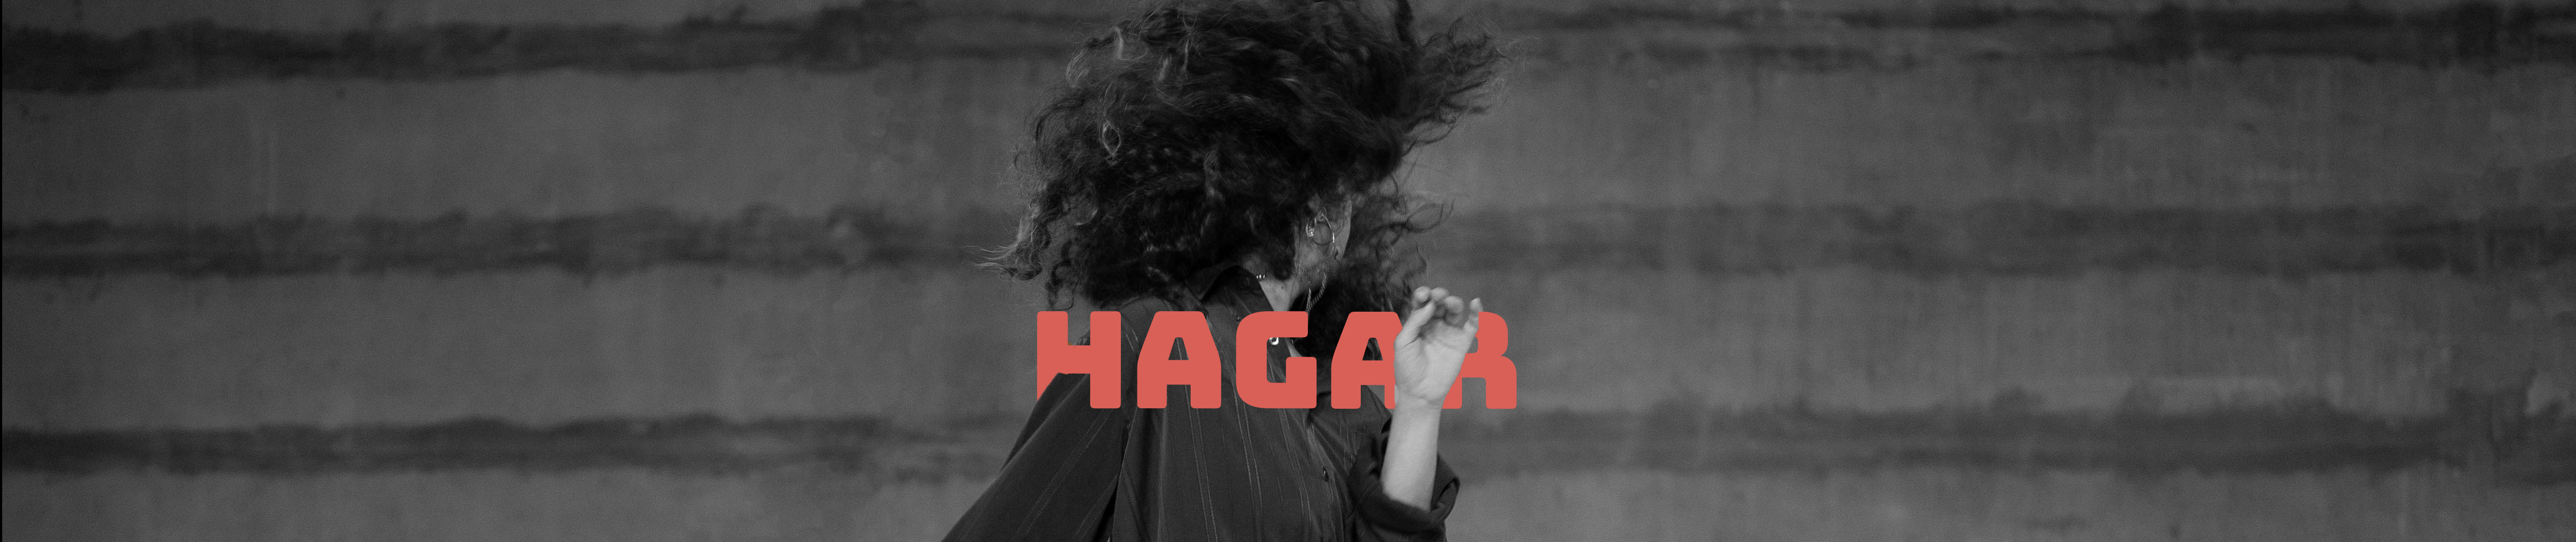 Hagar Weizman's profile banner